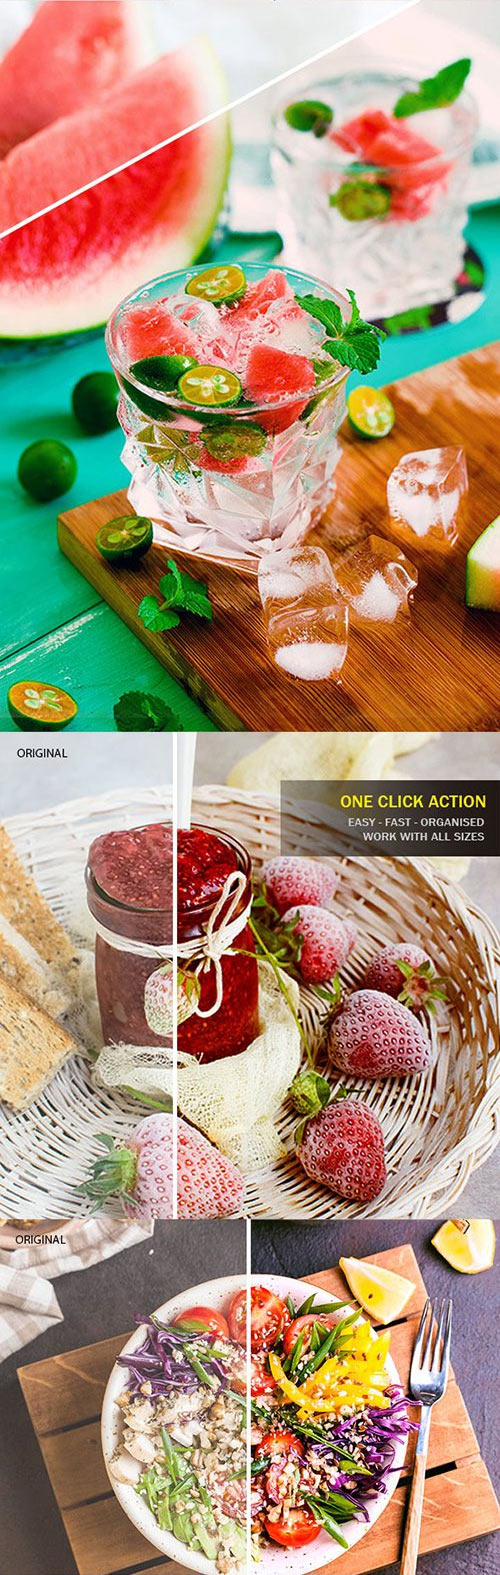 Food Photoshop Action 22196045